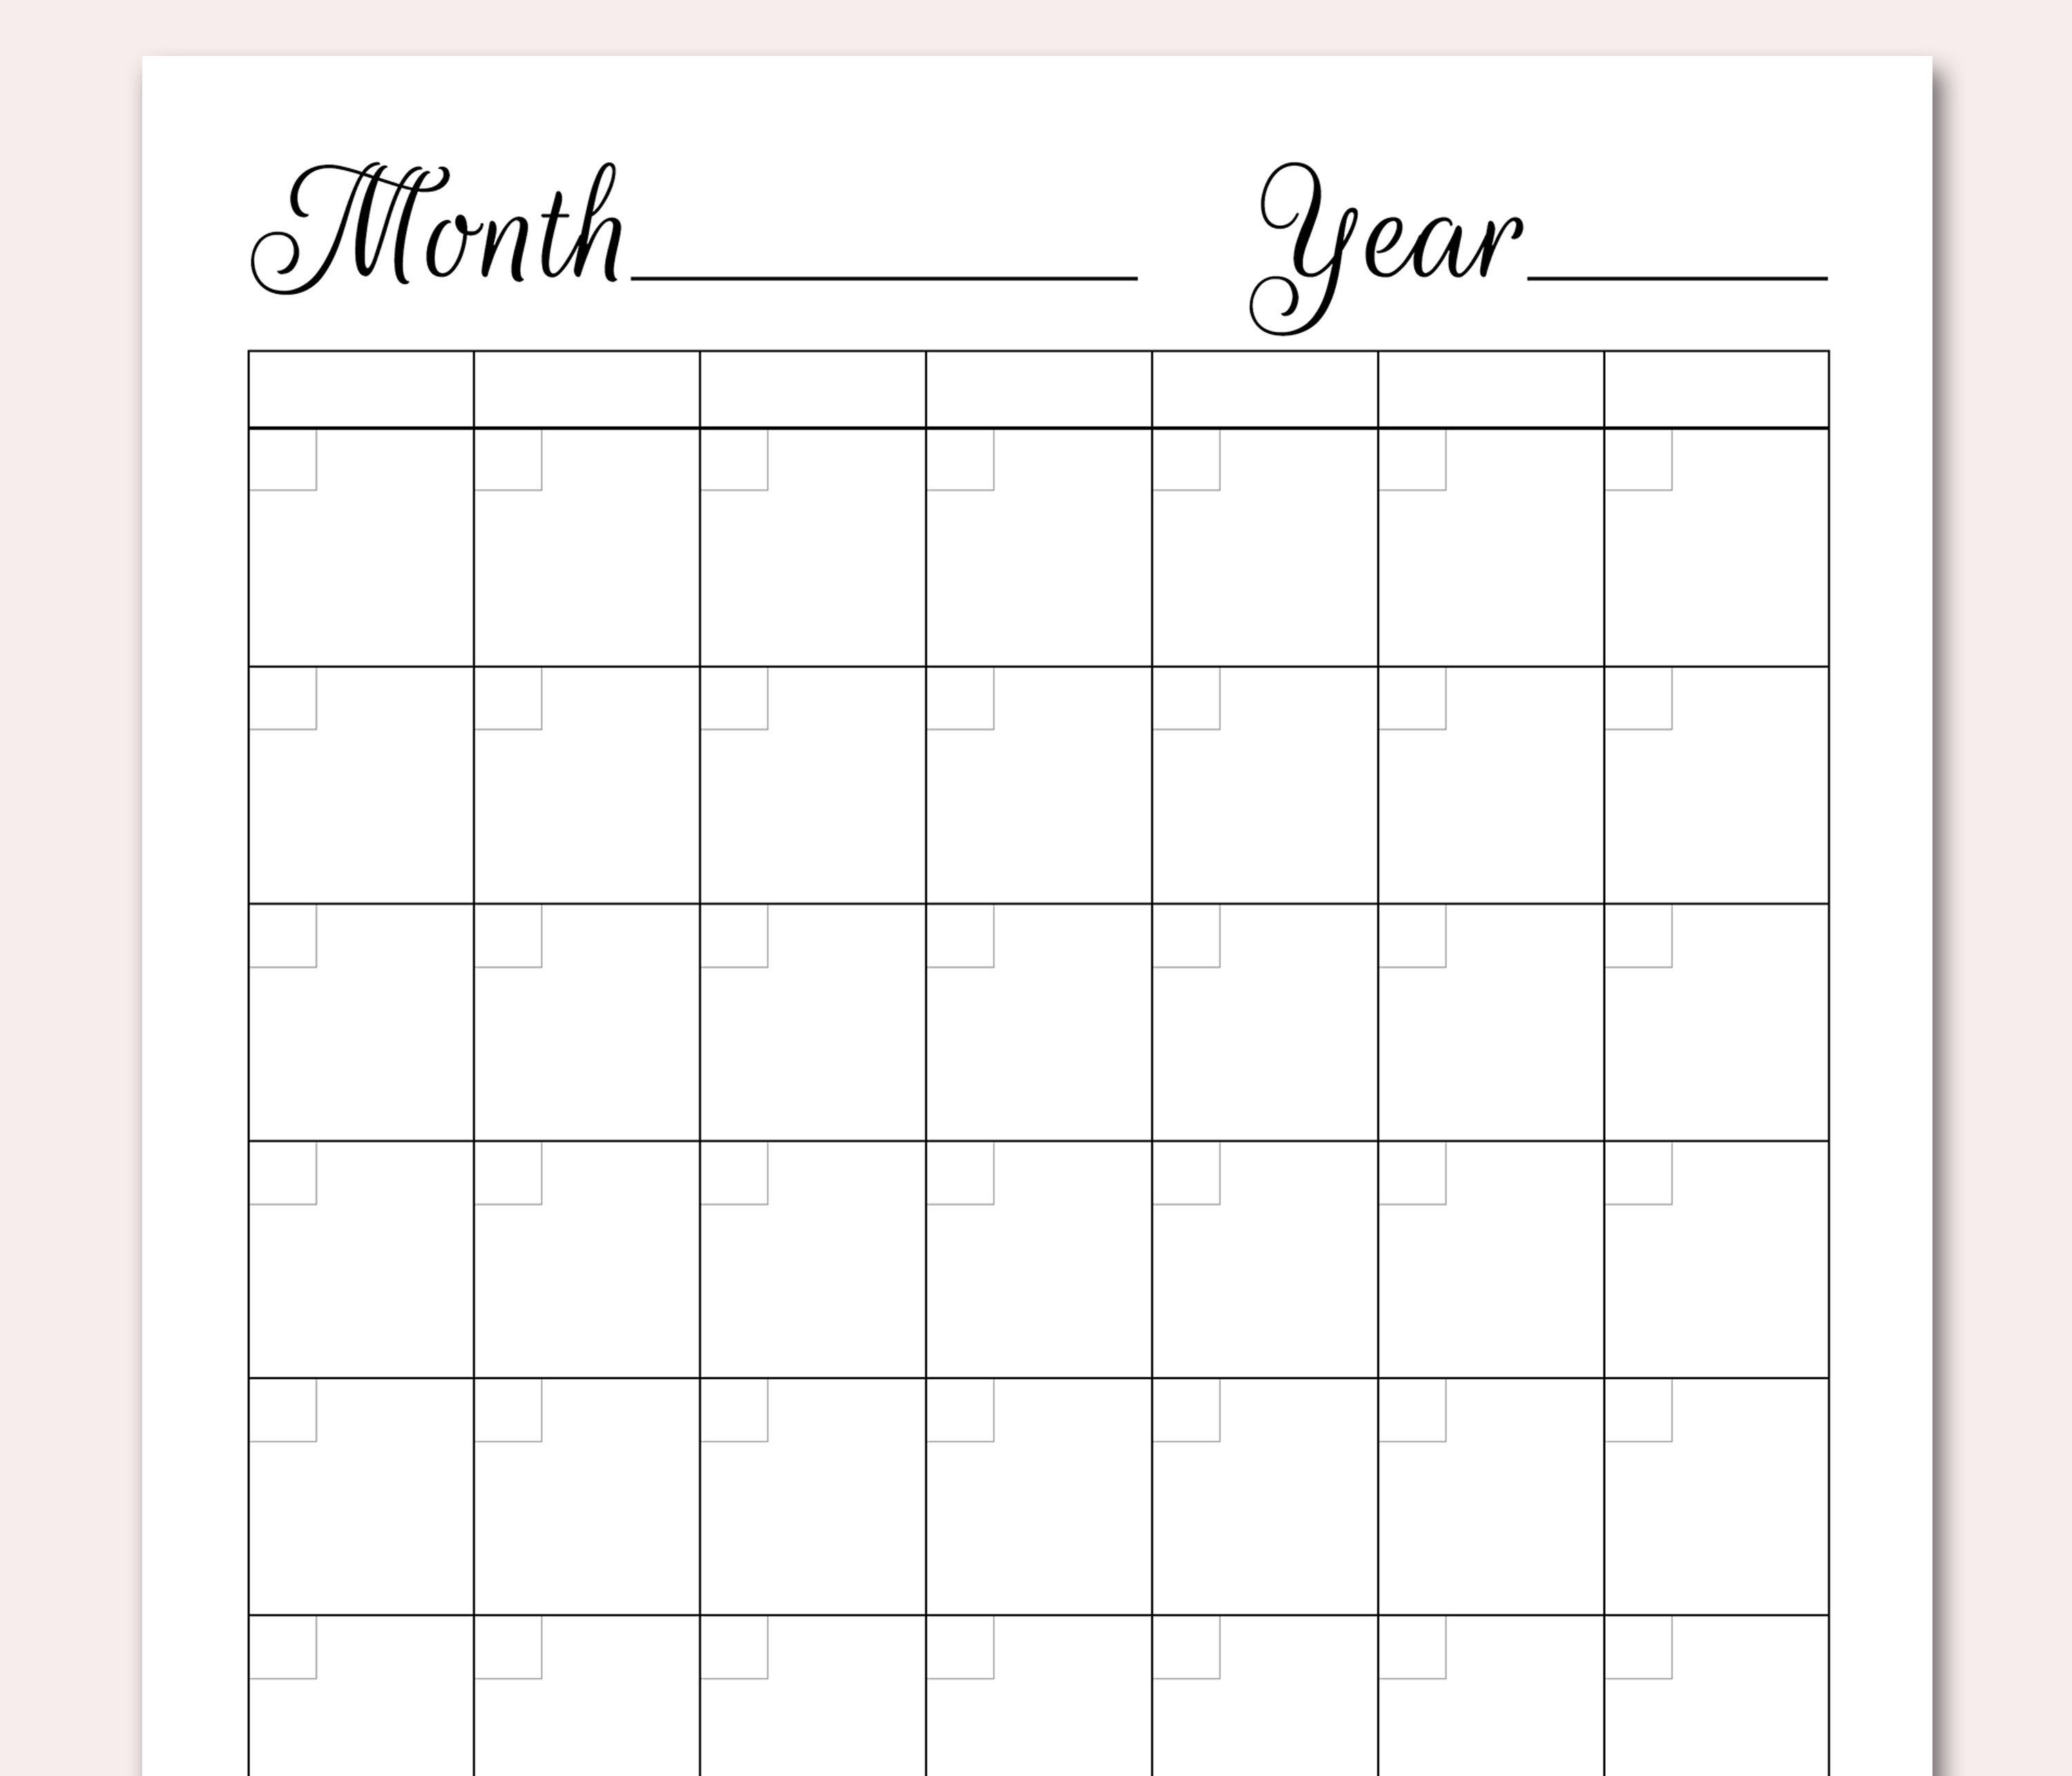 Blank Calendar Printable, Blank Perpetual Calendar, Diy Calendar Planner,  Blank Monthly Calendar Pdf, Custom, Simple, To Do, Planner, Desk-Perpetual Calendar Template Pdf